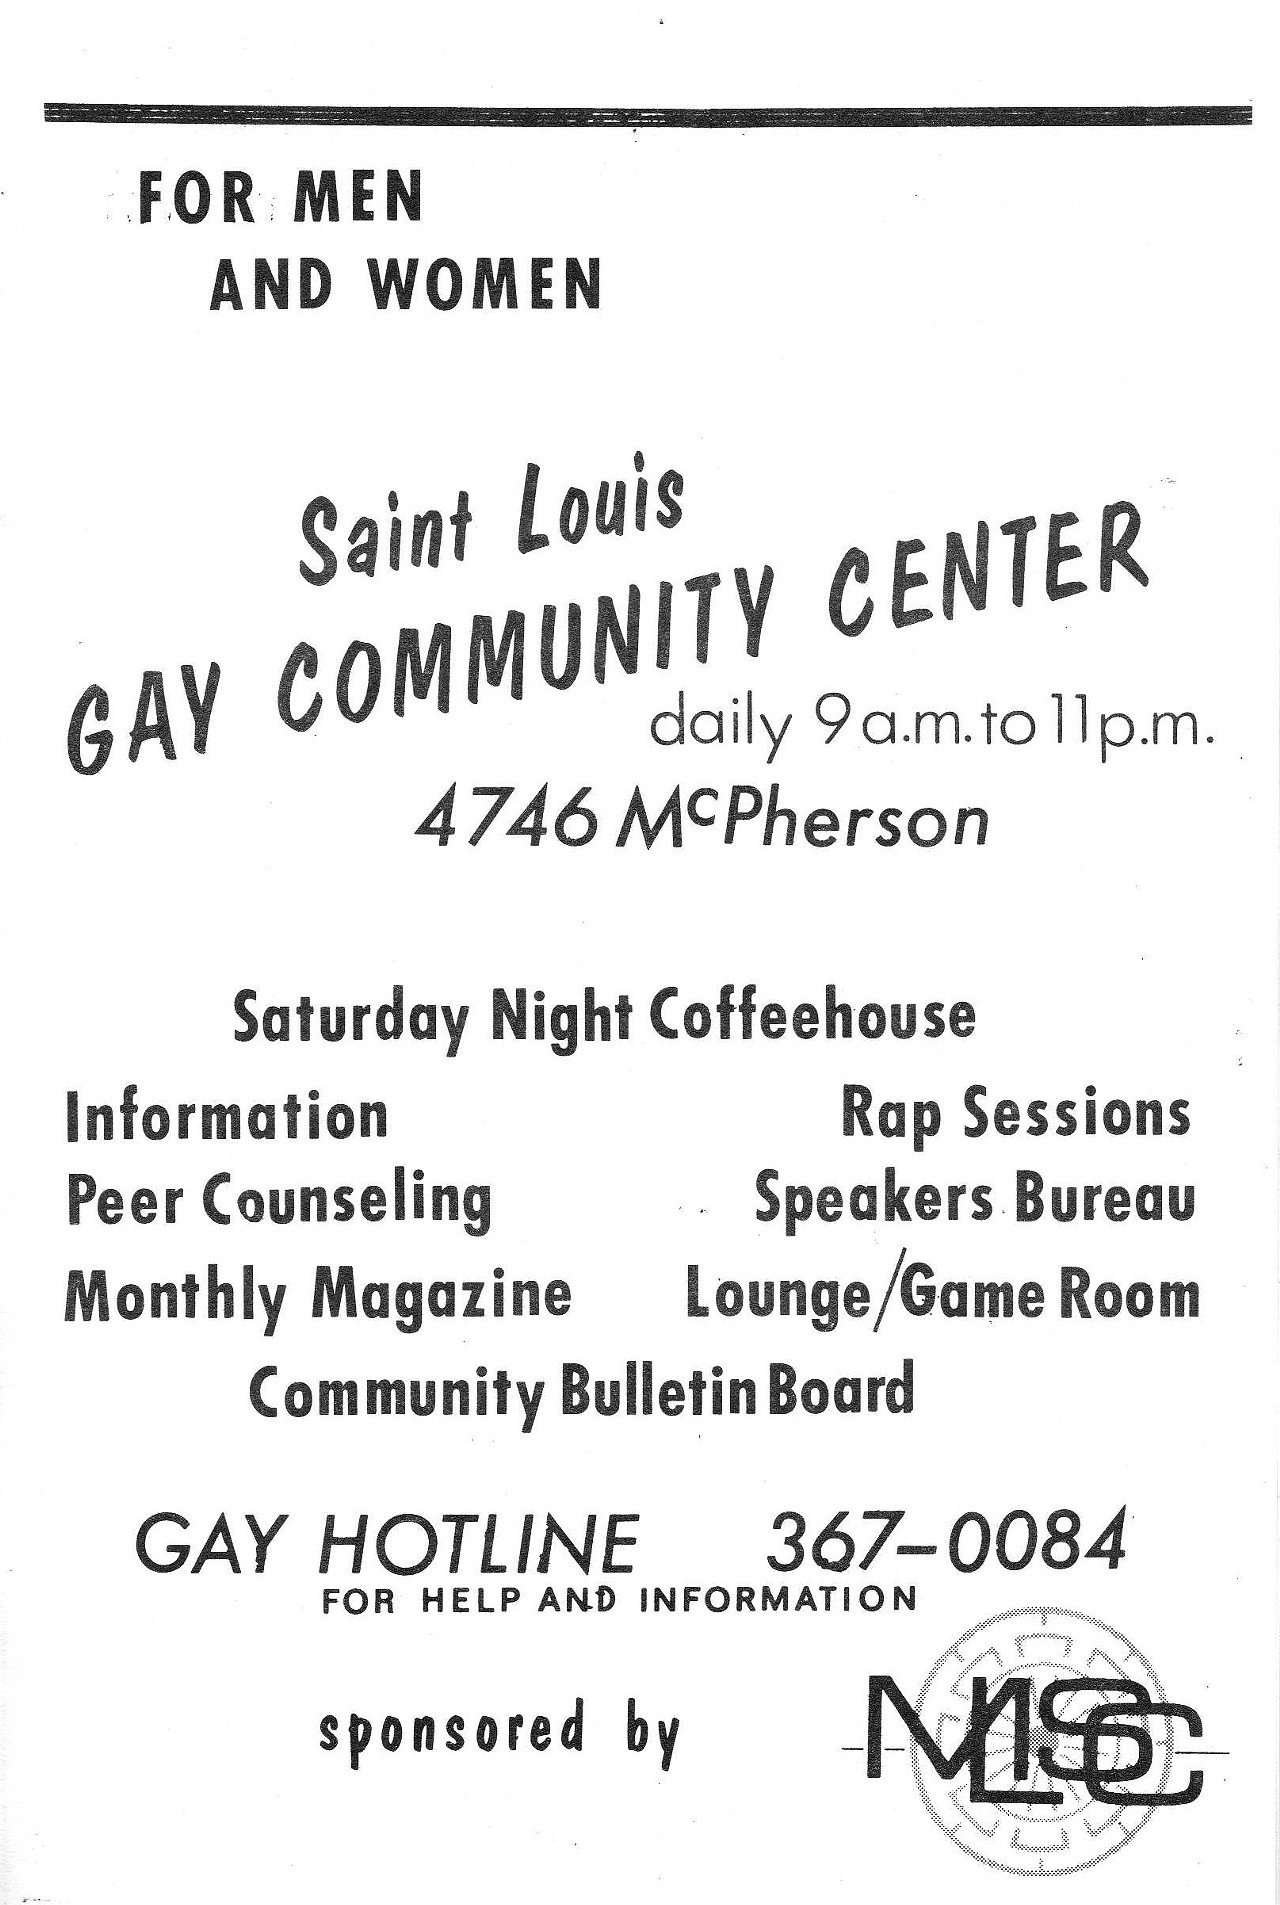 St. Louis Gay Community Center, 1978